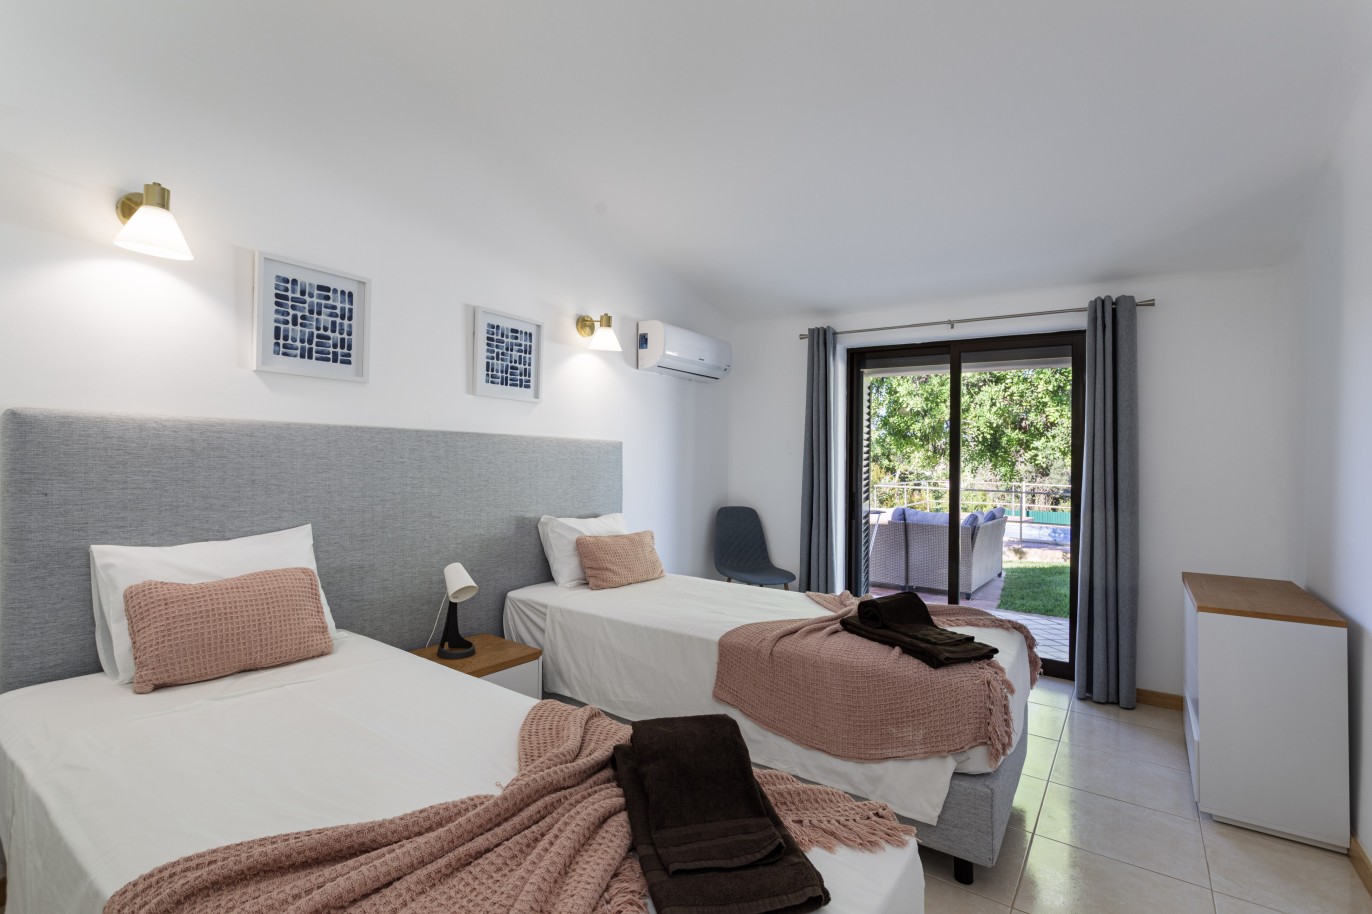 4 bedroom villa with pool, for sale in Albufeira, Algarve_233598